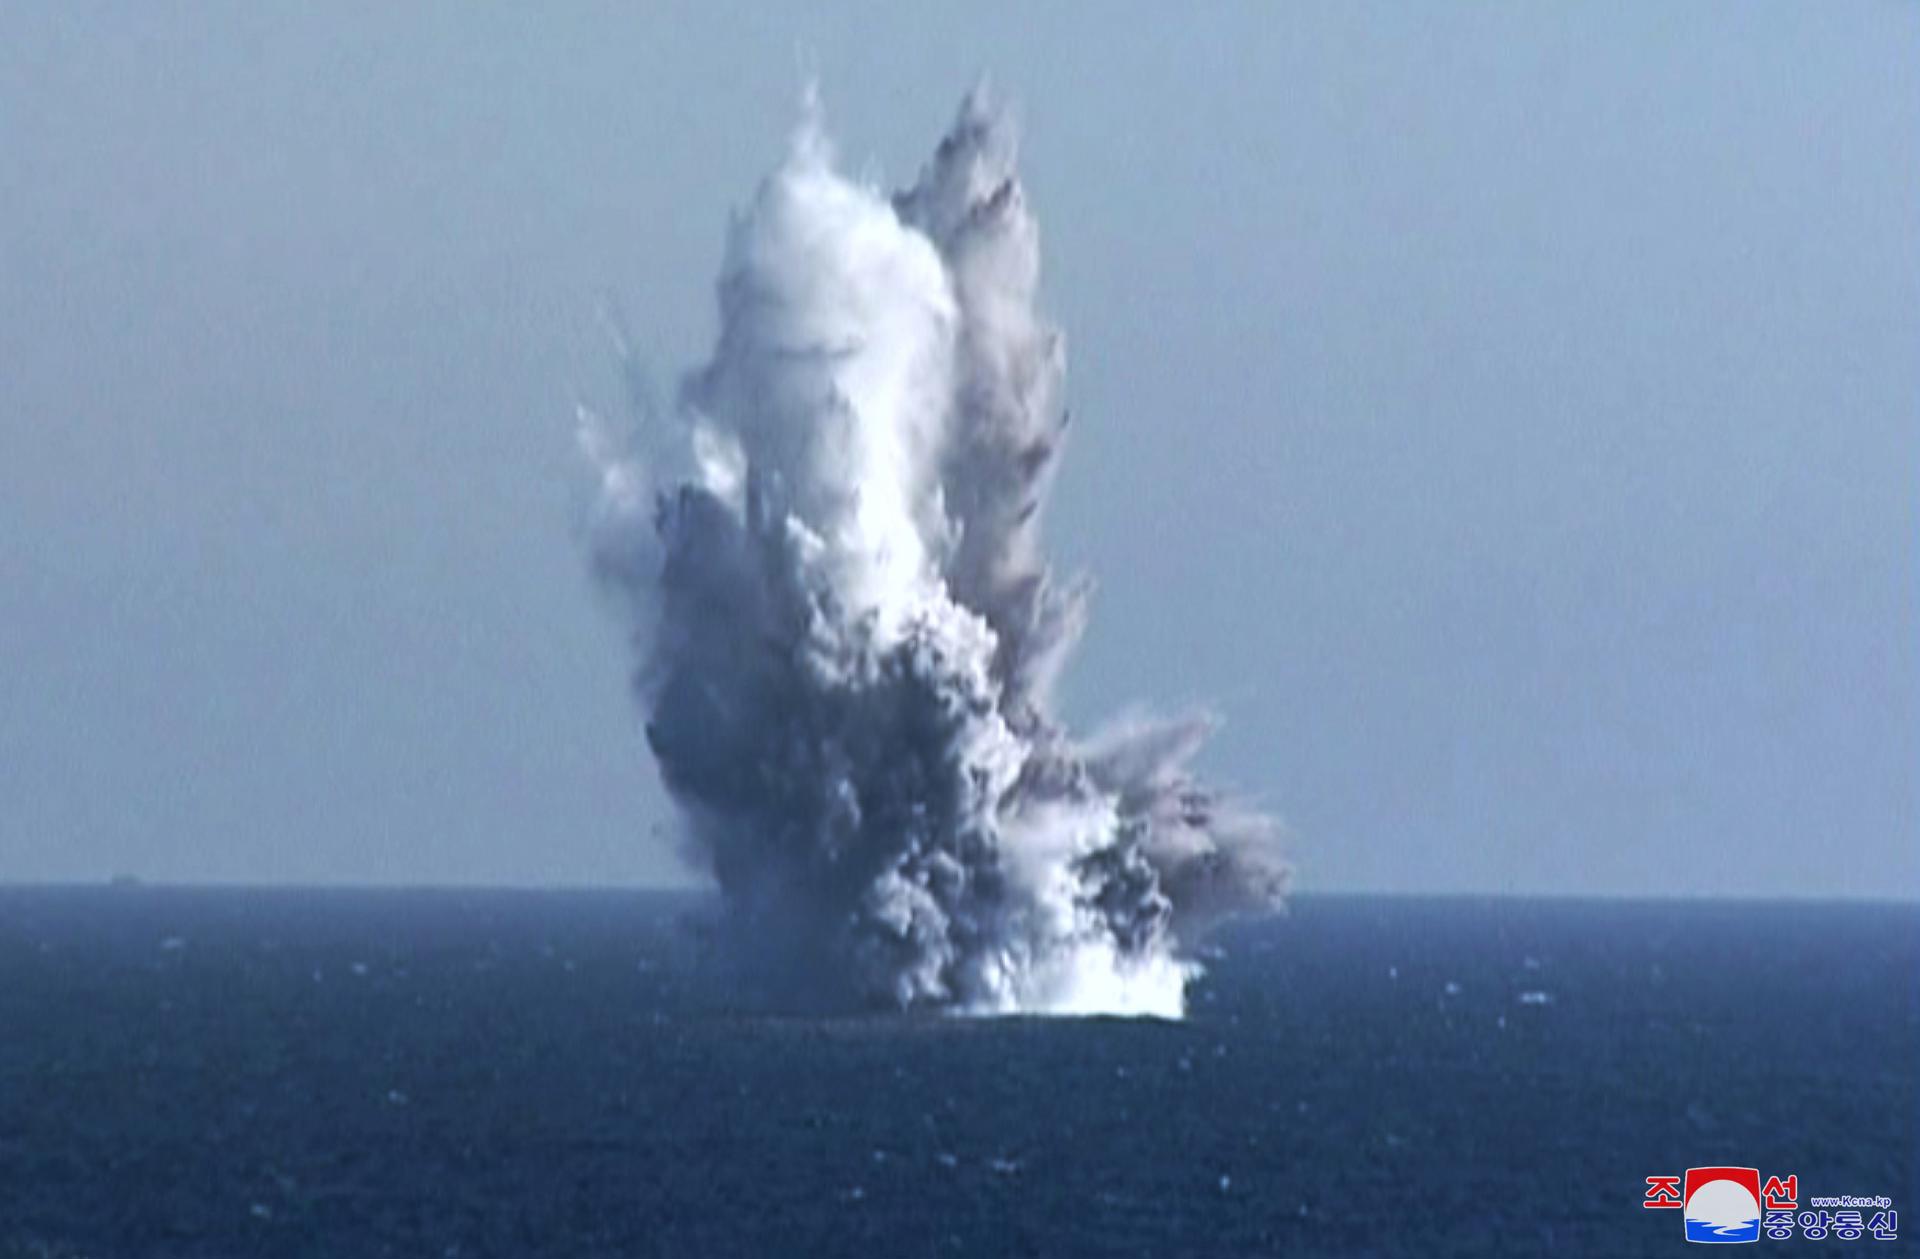 Corea del Norte probó un dron submarino capaz de generar “ataques atómicos”